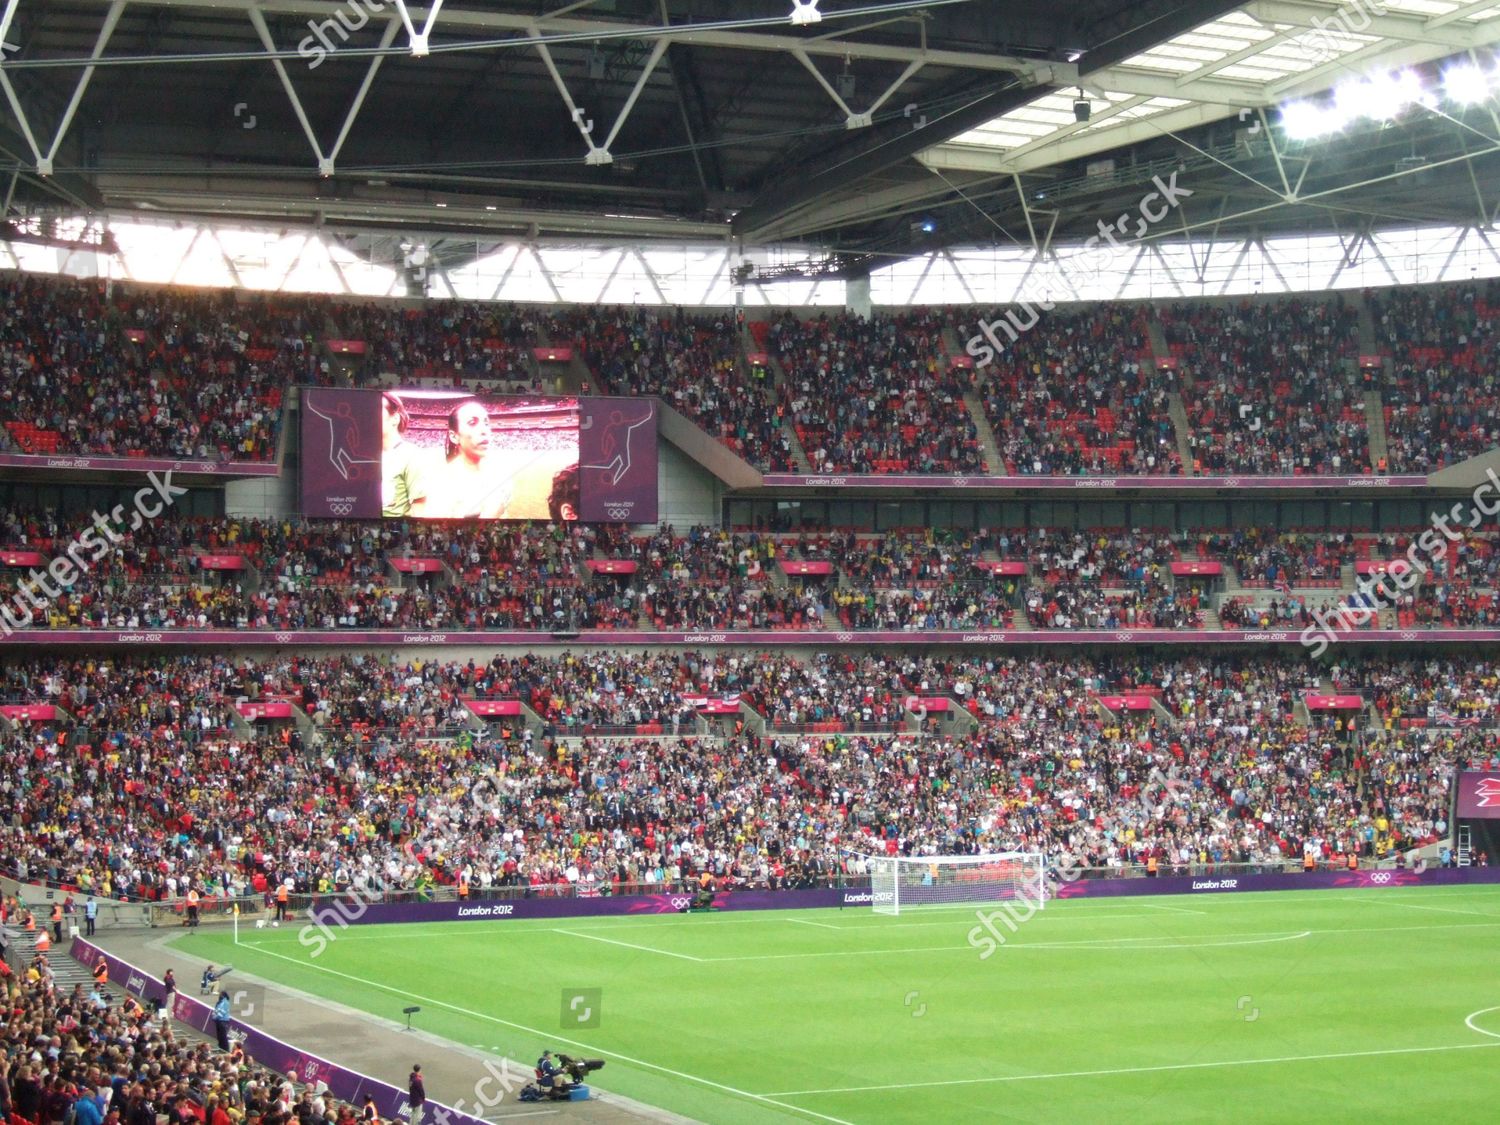 NFL London 2012 at Wembley Stadium.